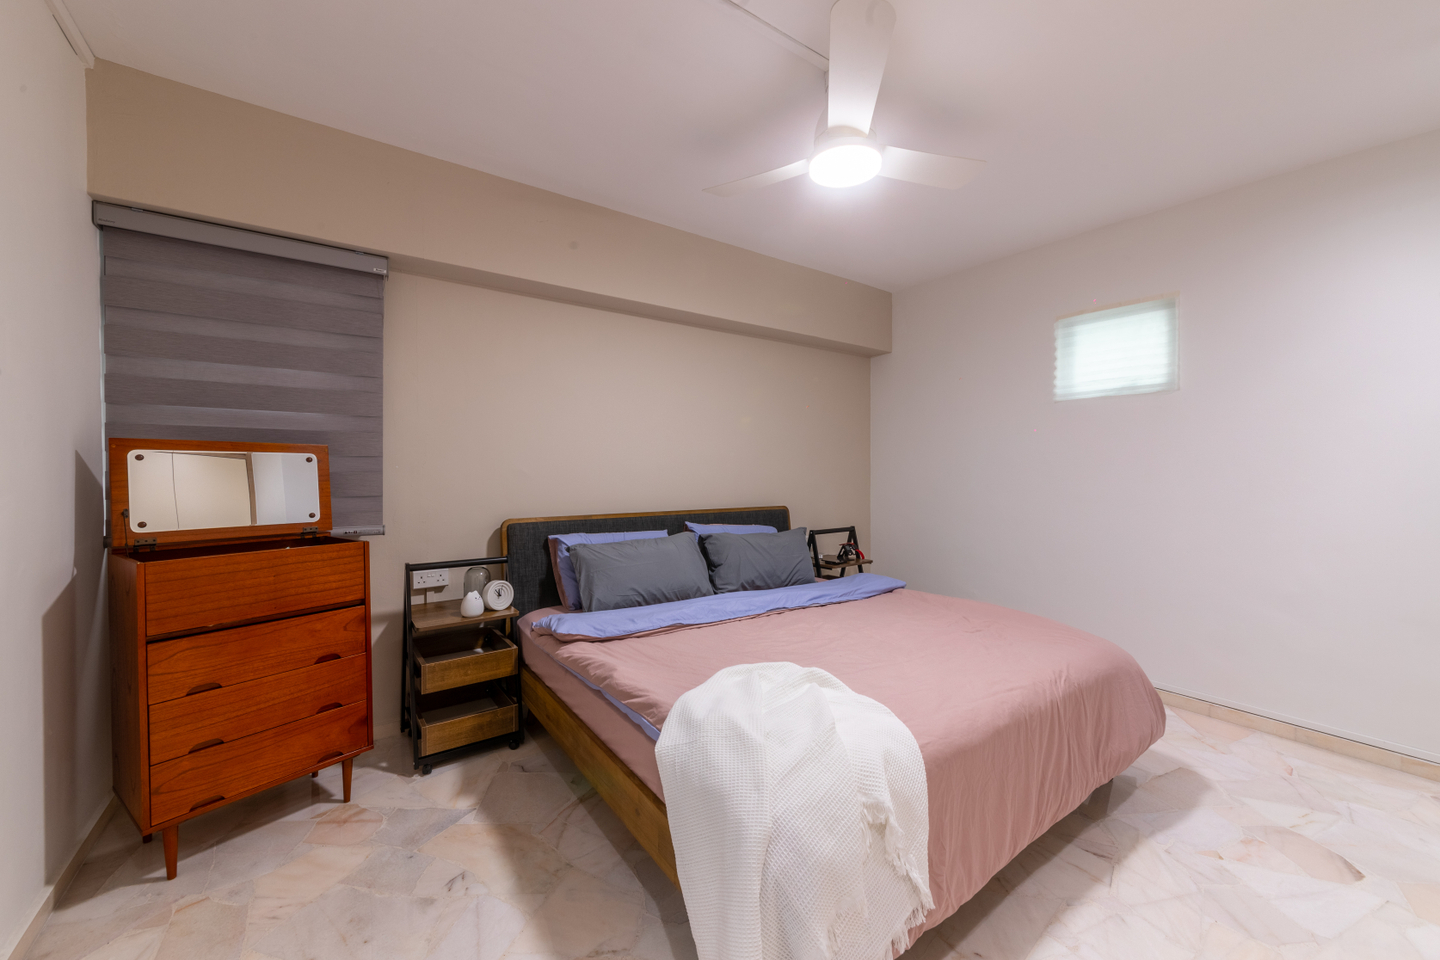 Minimalist Bedroom With Convenient Storage - Livspace